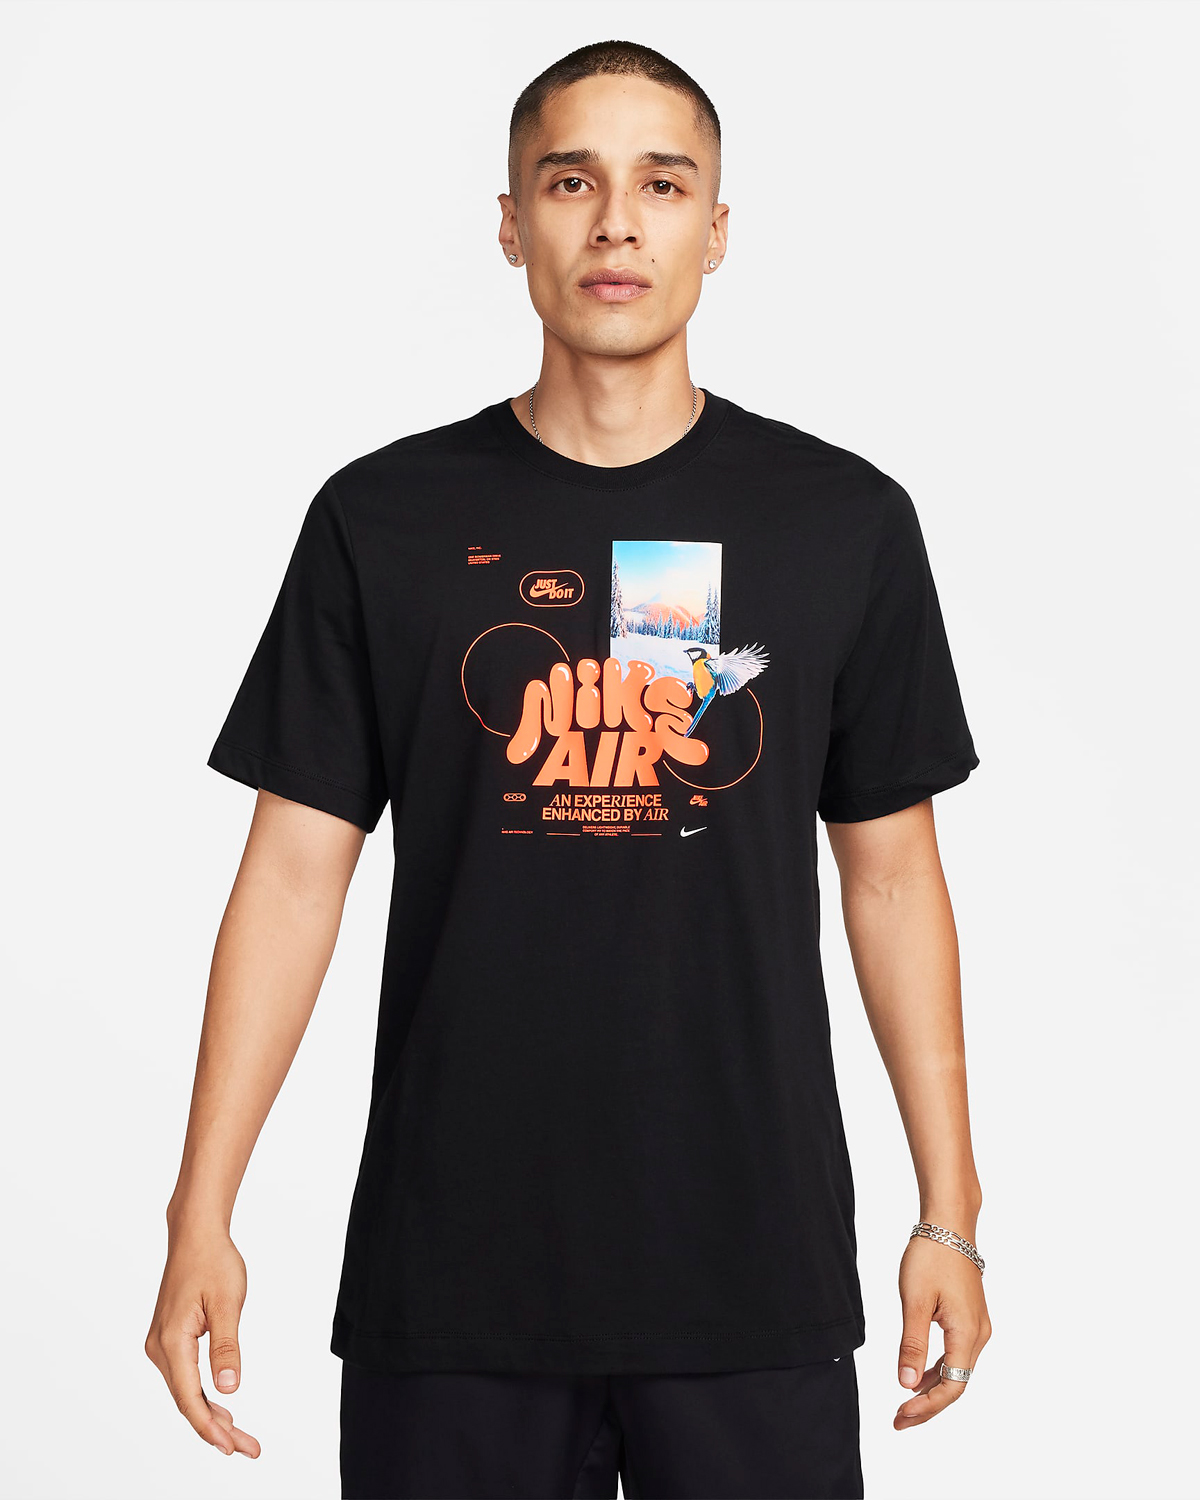 Nike-Sportswear-Nike-Air-T-Shirt-Black-Orange-1